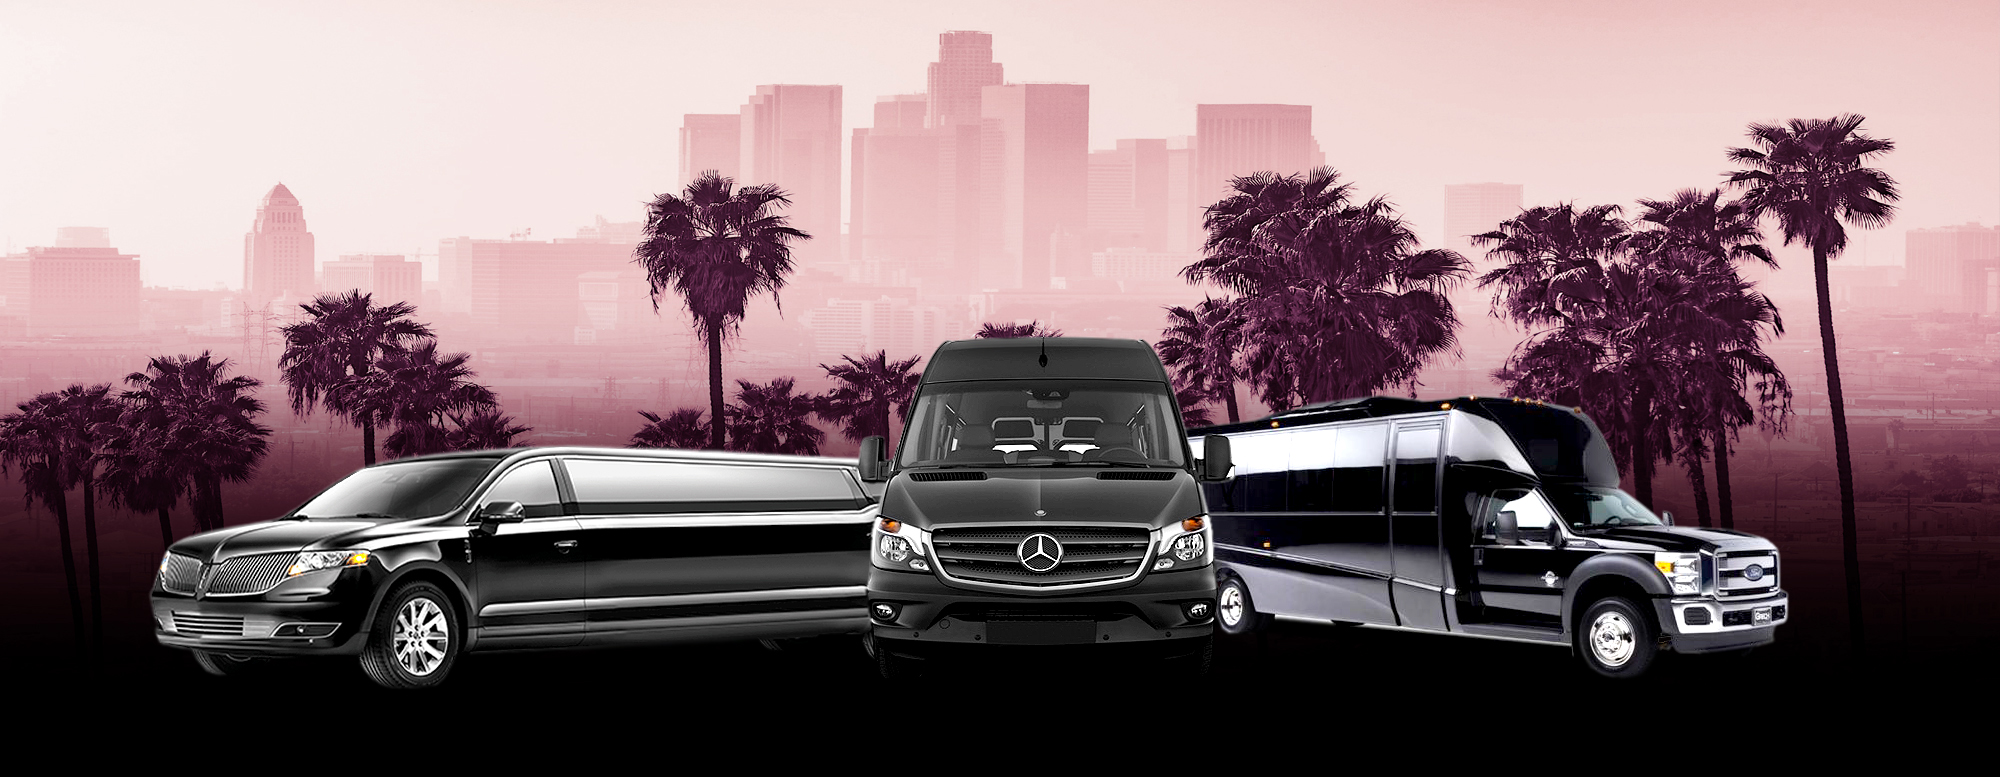 Los Angeles corporate limousine